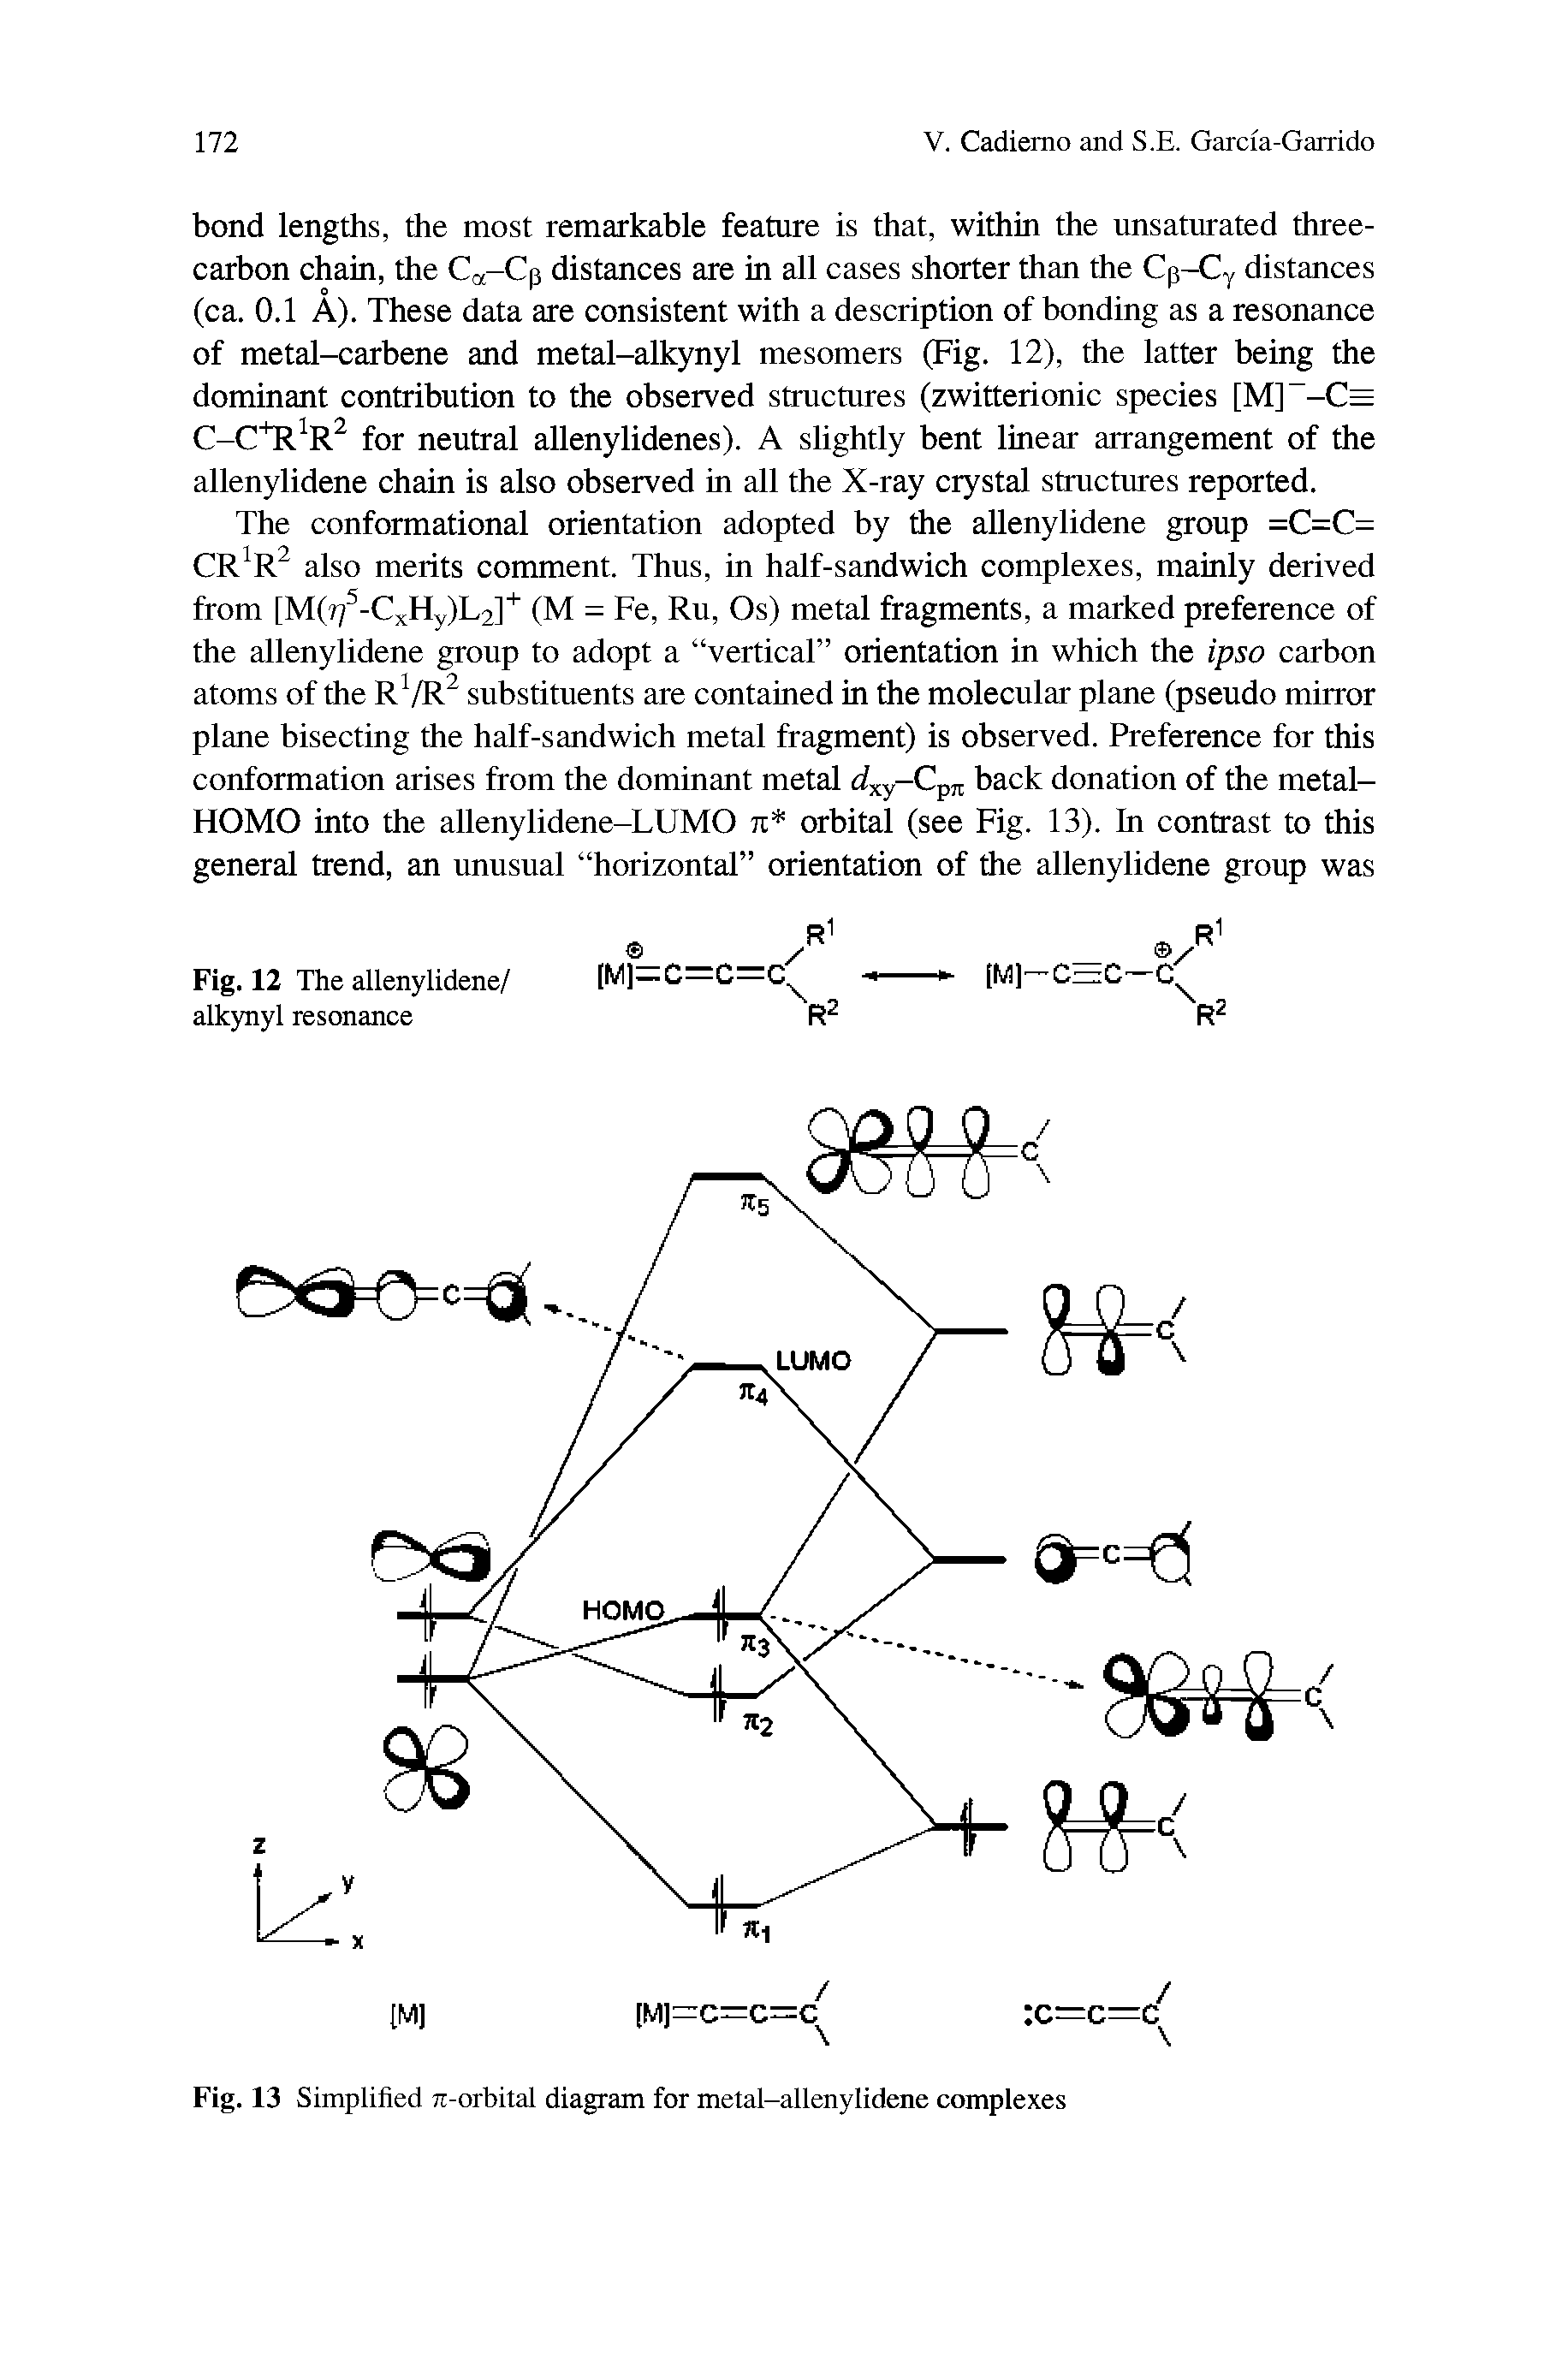 Fig. 13 Simplified 7i-orbital diagram for metal-allenylidene complexes...